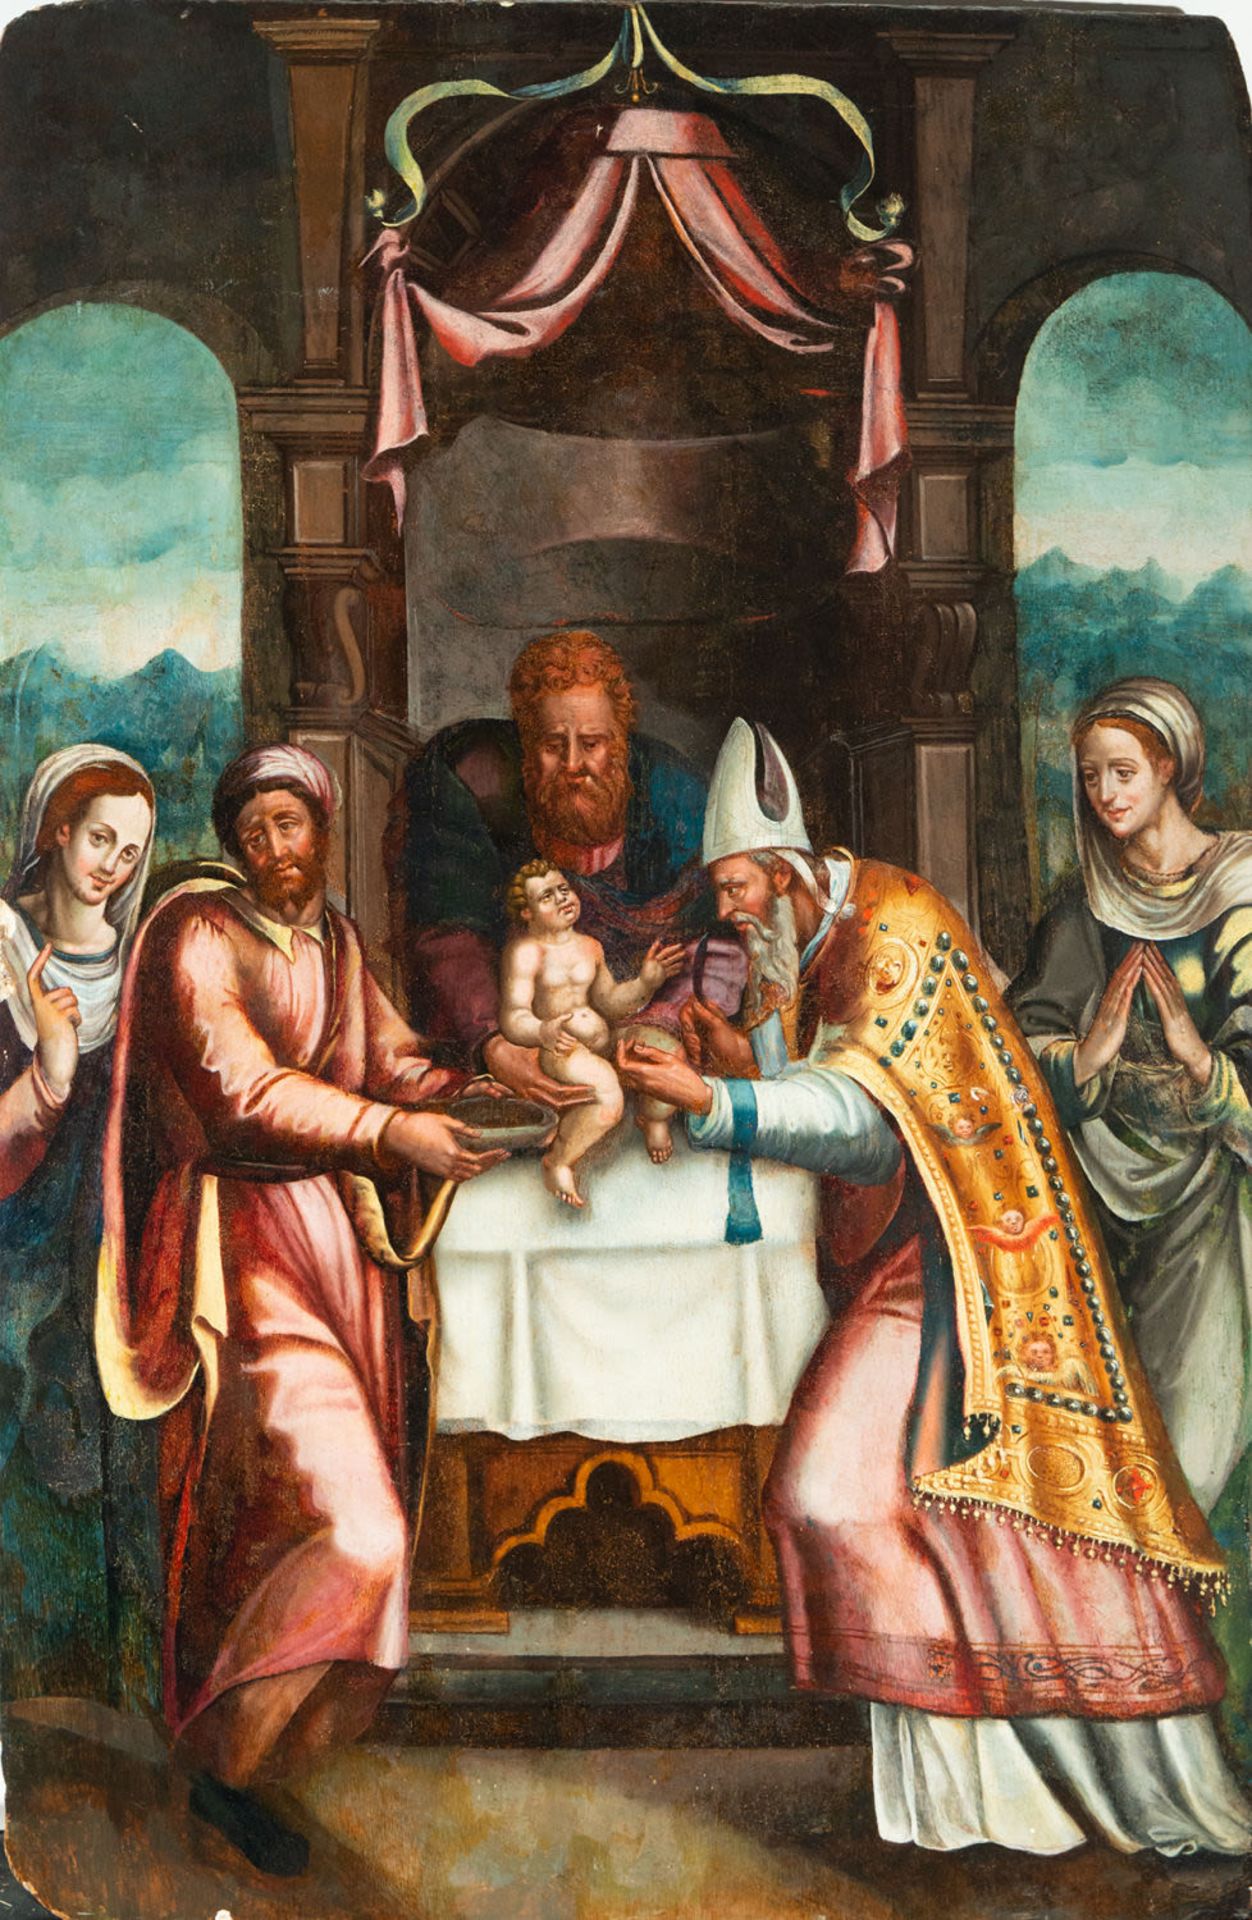 The Circumcision of Christ, 16th century Italian mannerist school